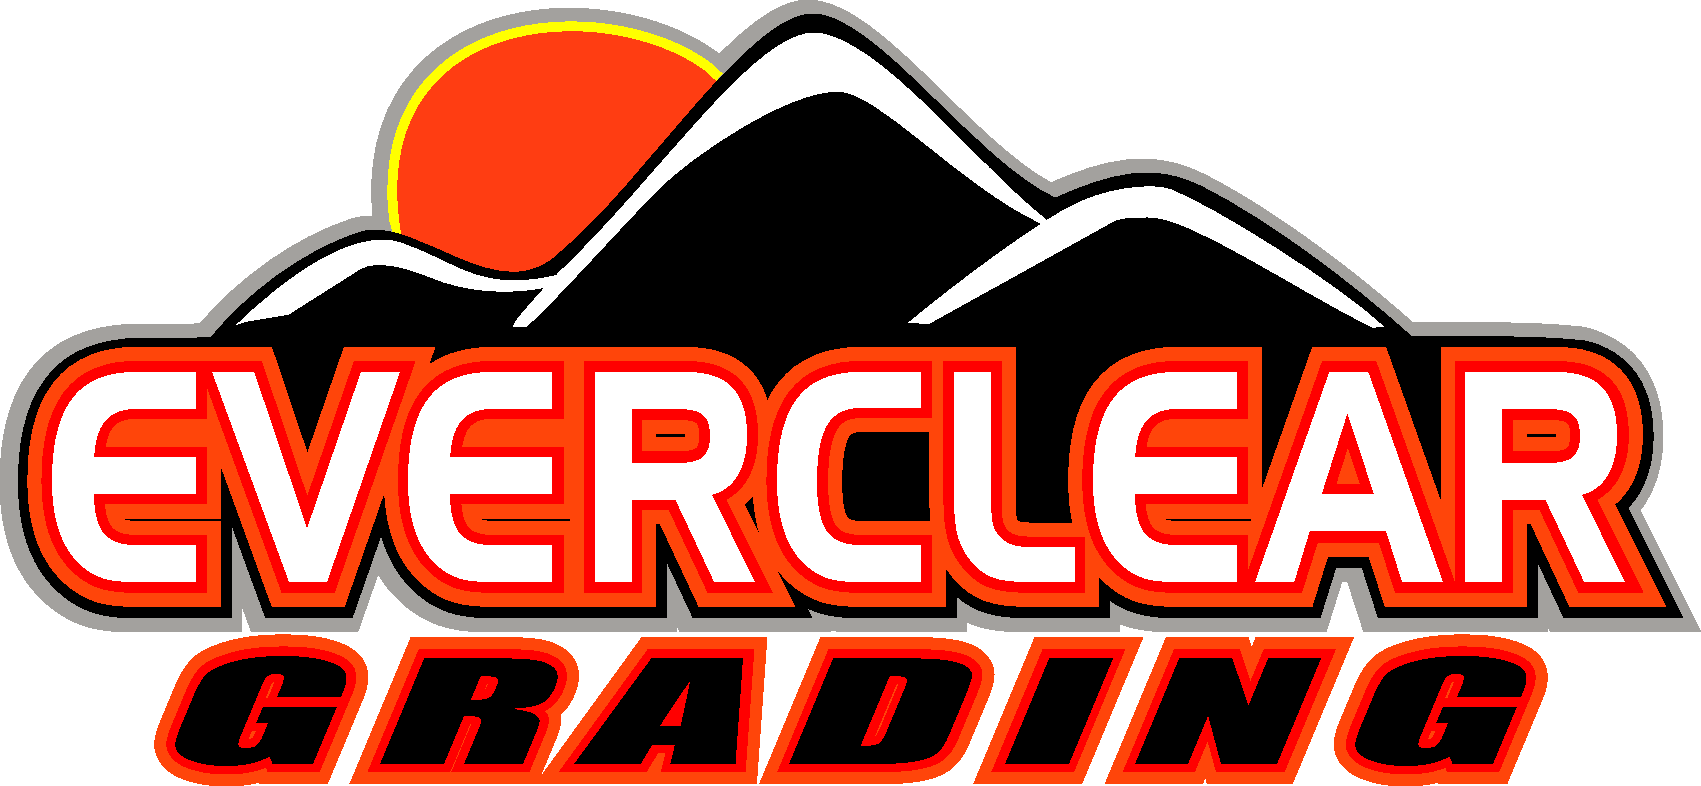 Everclear Logo - Everclear Grading | Powder Springs, GA 30127